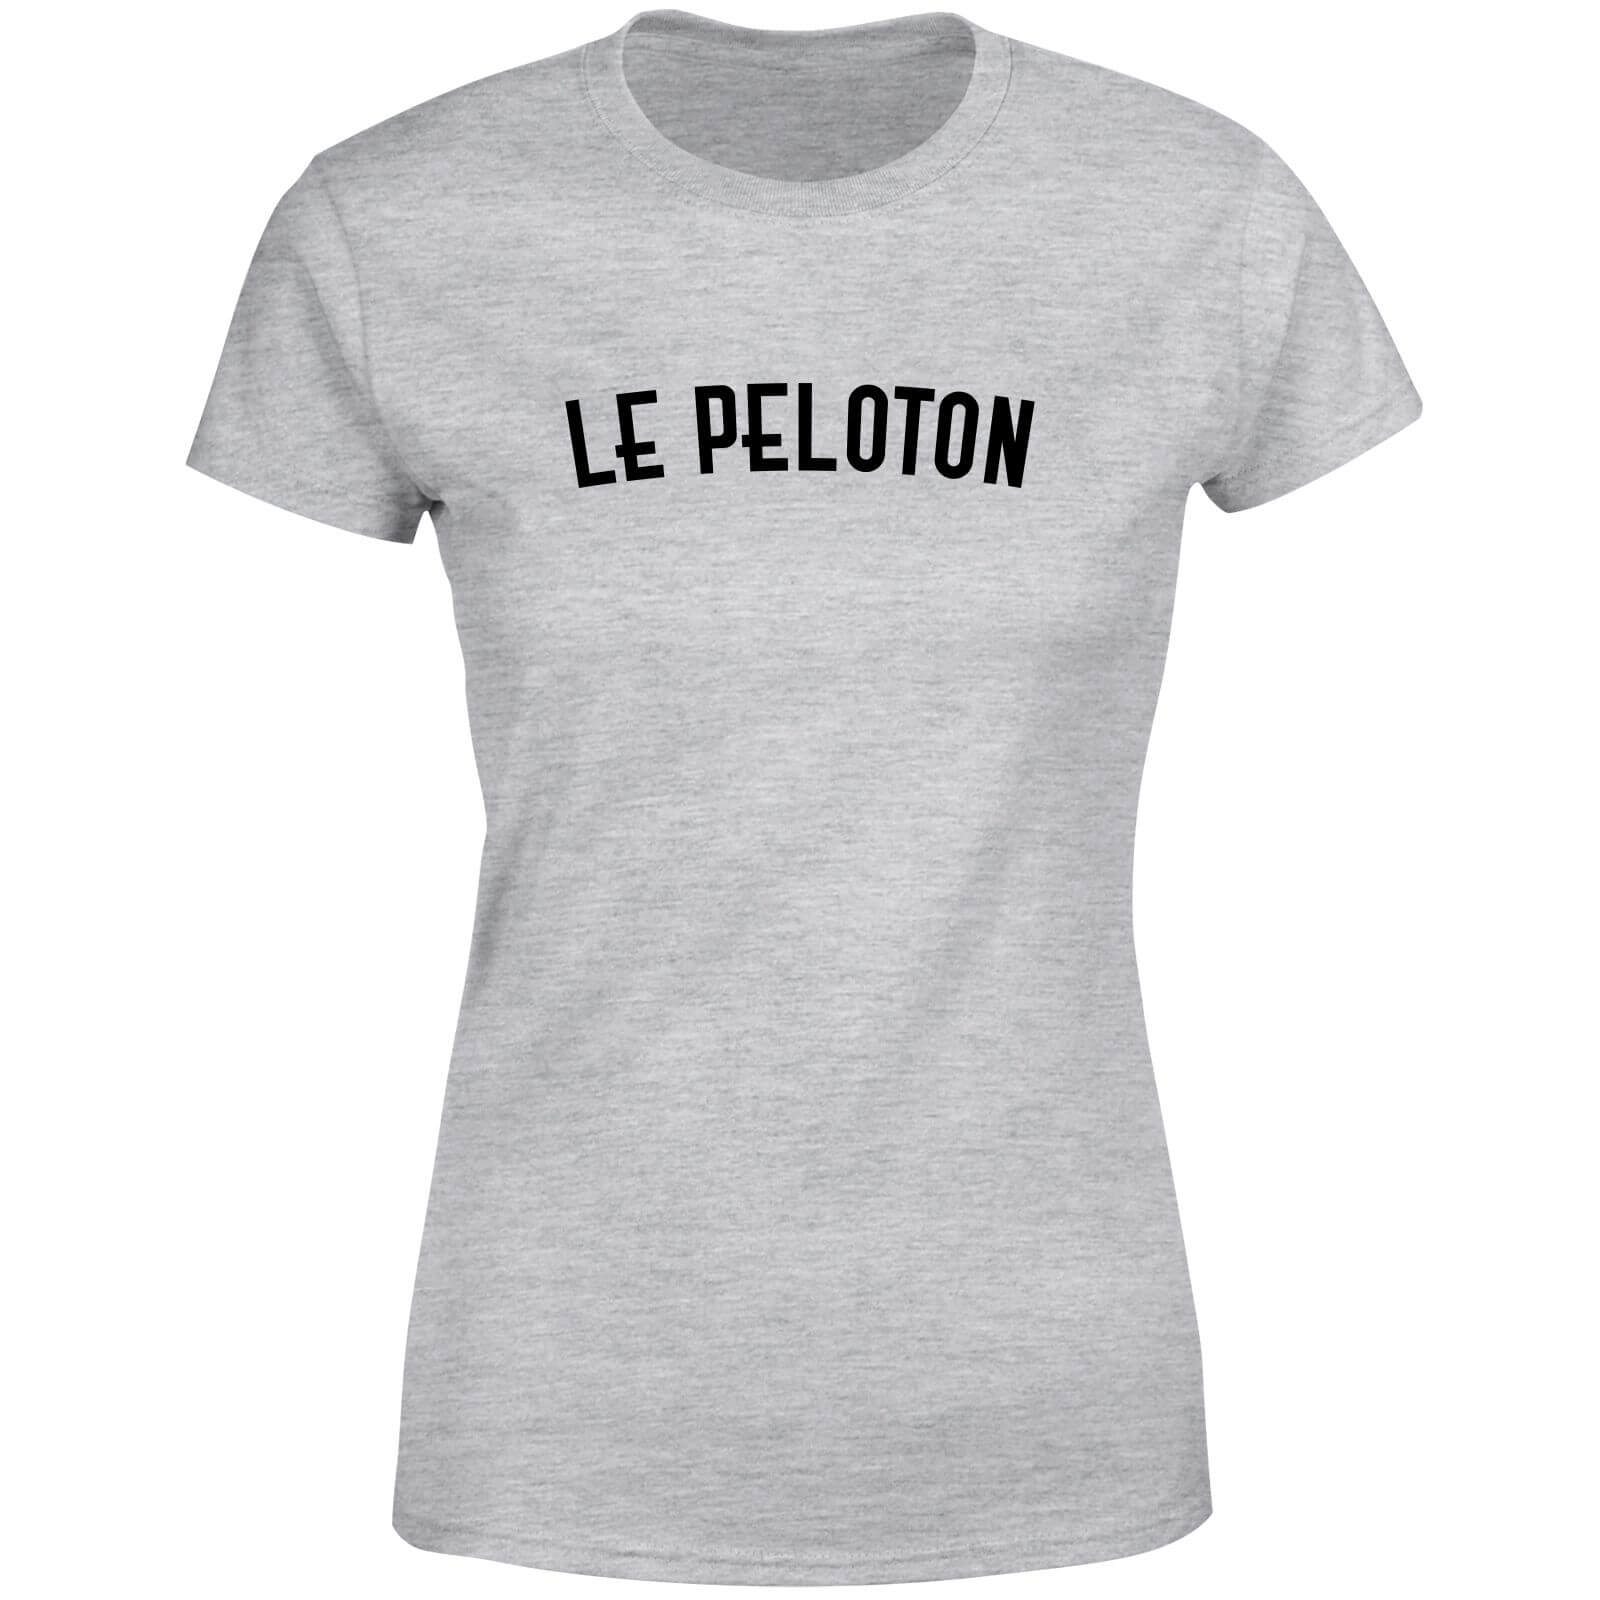 Le Peloton Women's T-Shirt - Grey - S - Grey